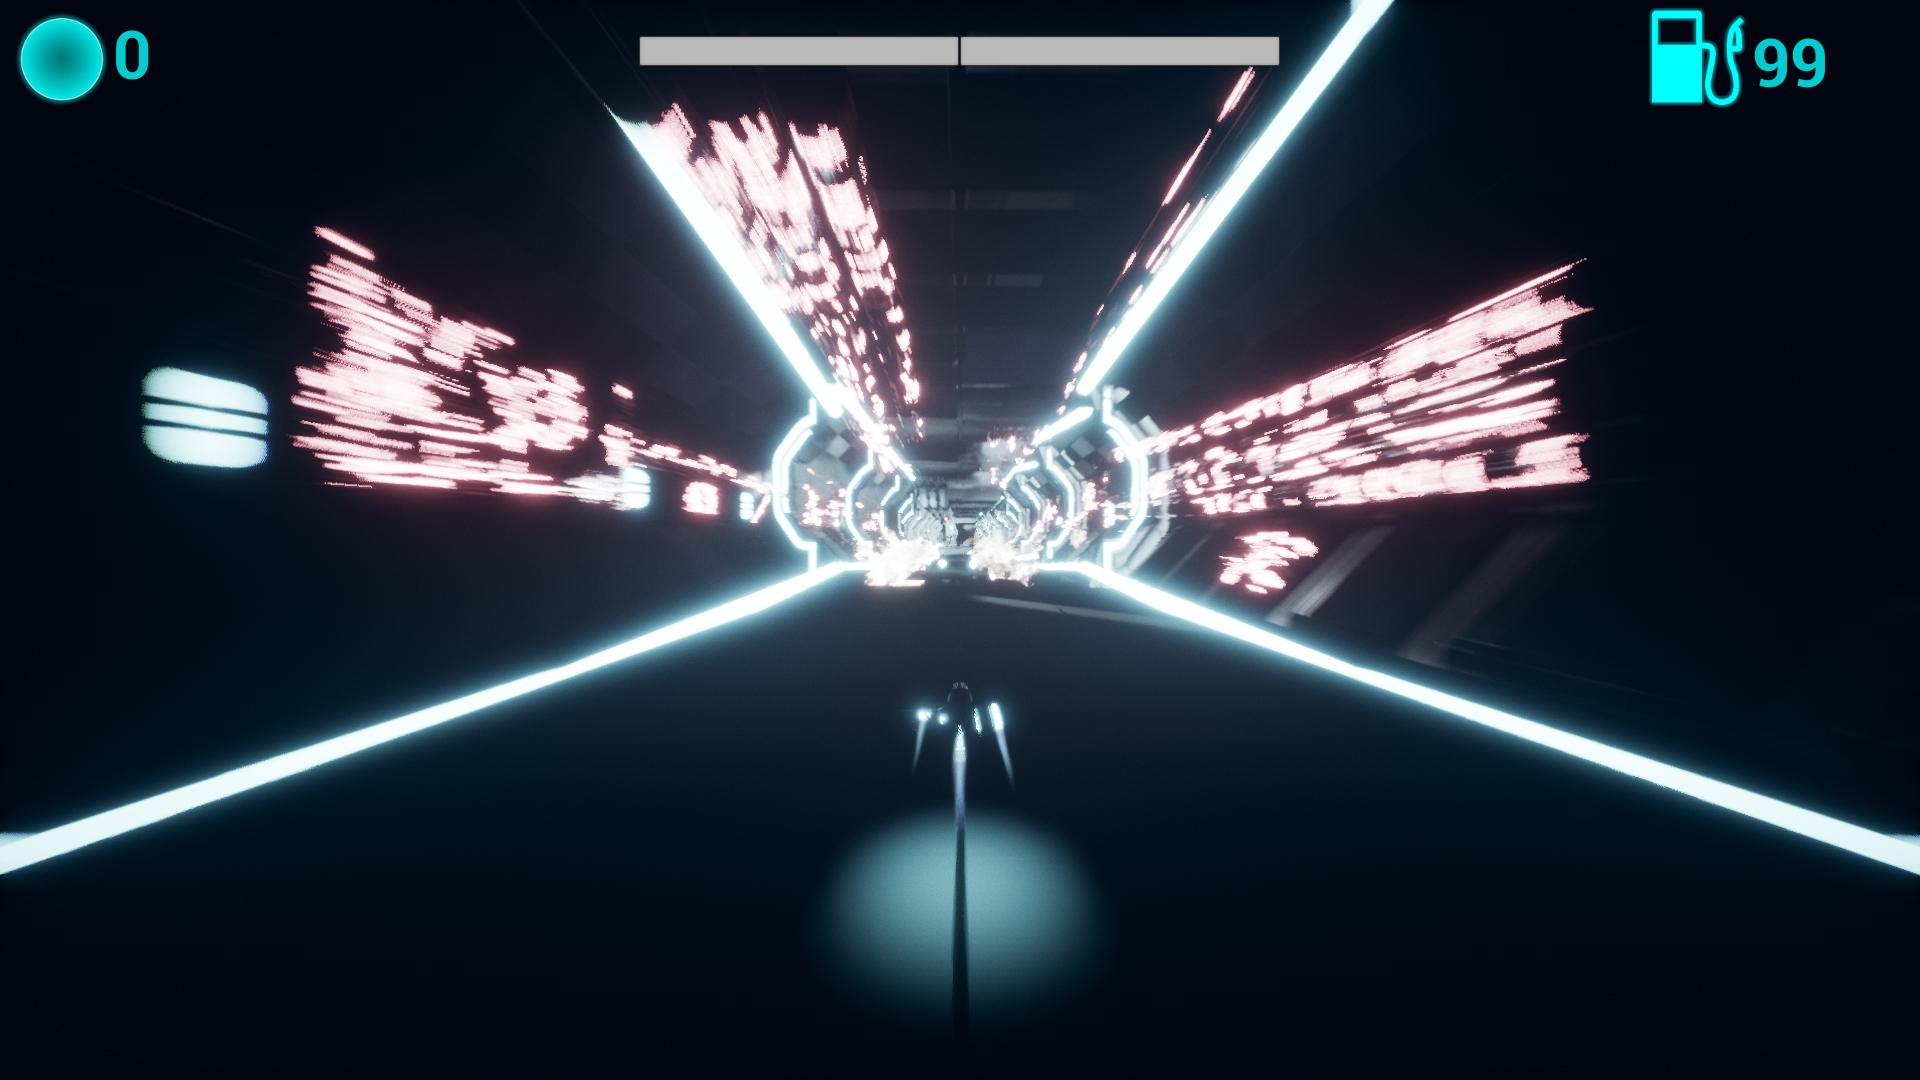 Screenshot №1 from game Deep Space Dash